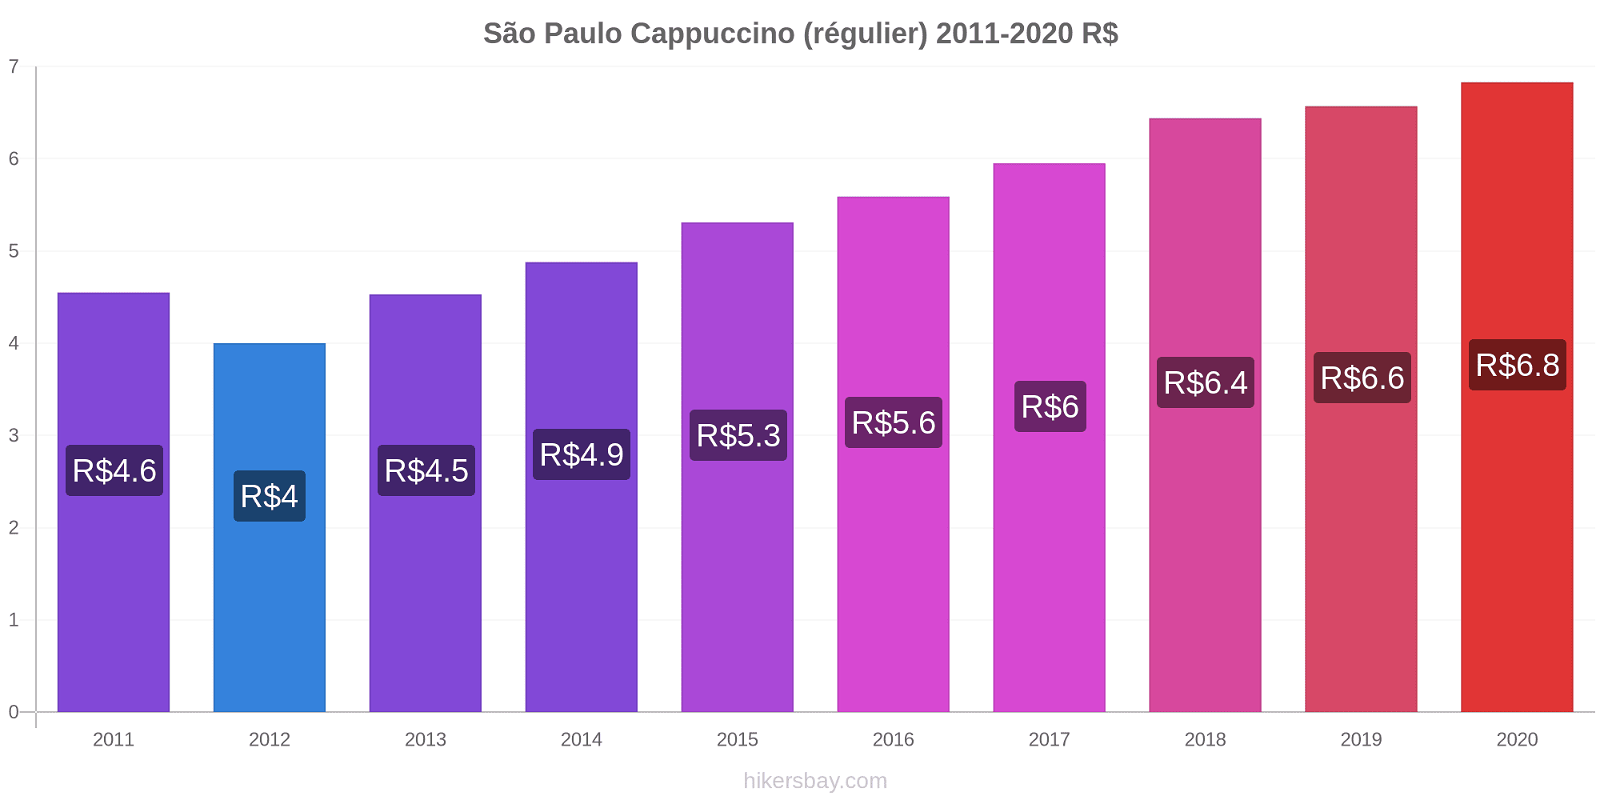 São Paulo changements de prix Cappuccino (régulier) hikersbay.com